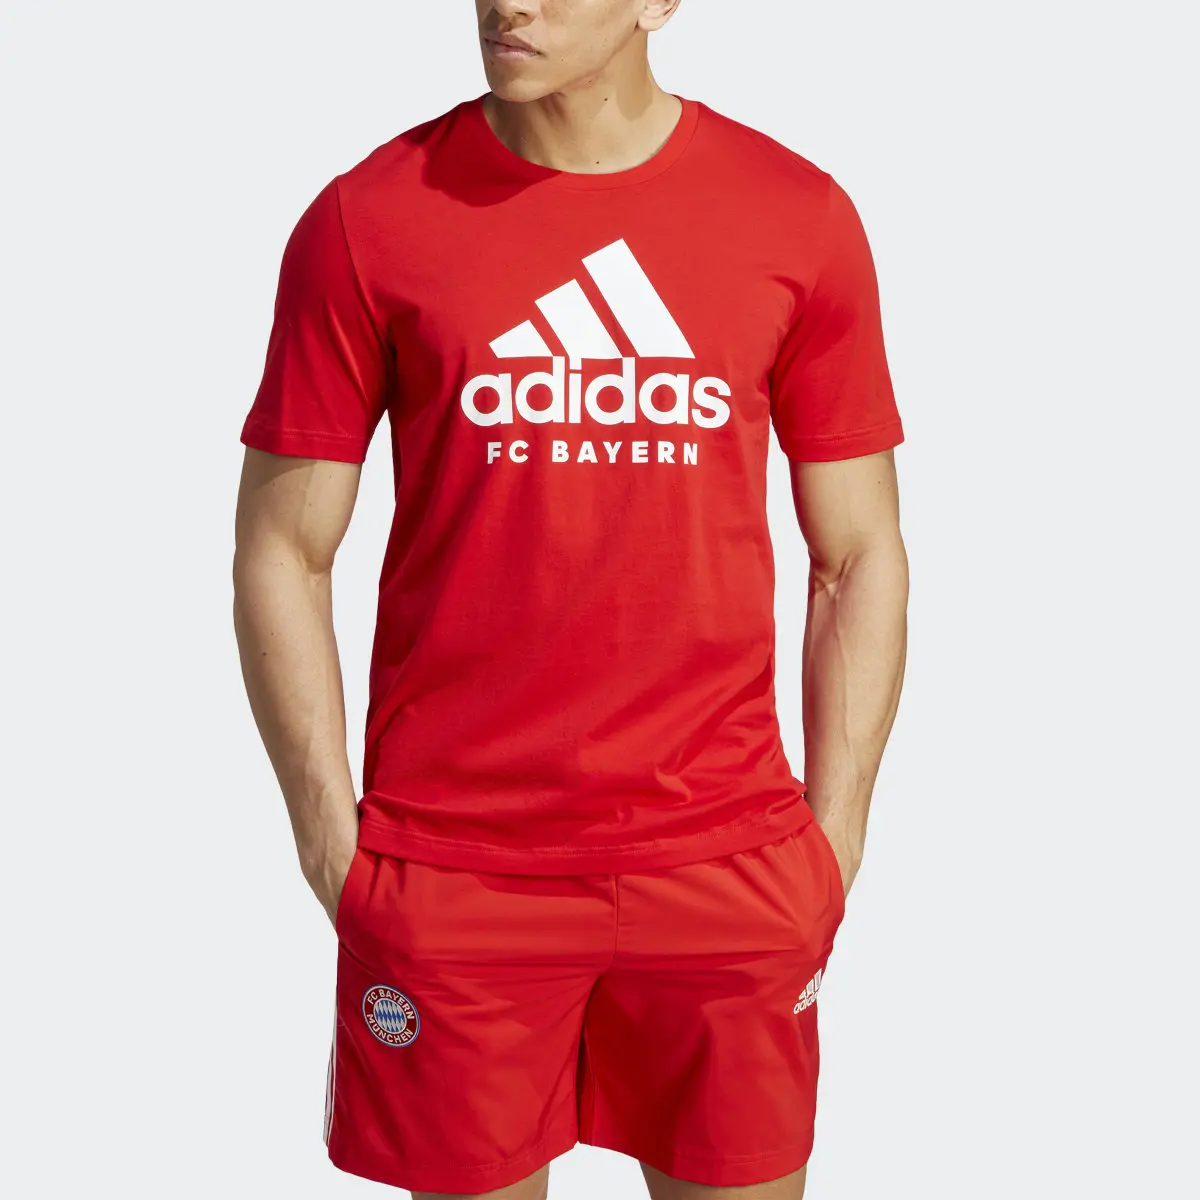 Adidas Camiseta FC Bayern DNA Graphic. 1